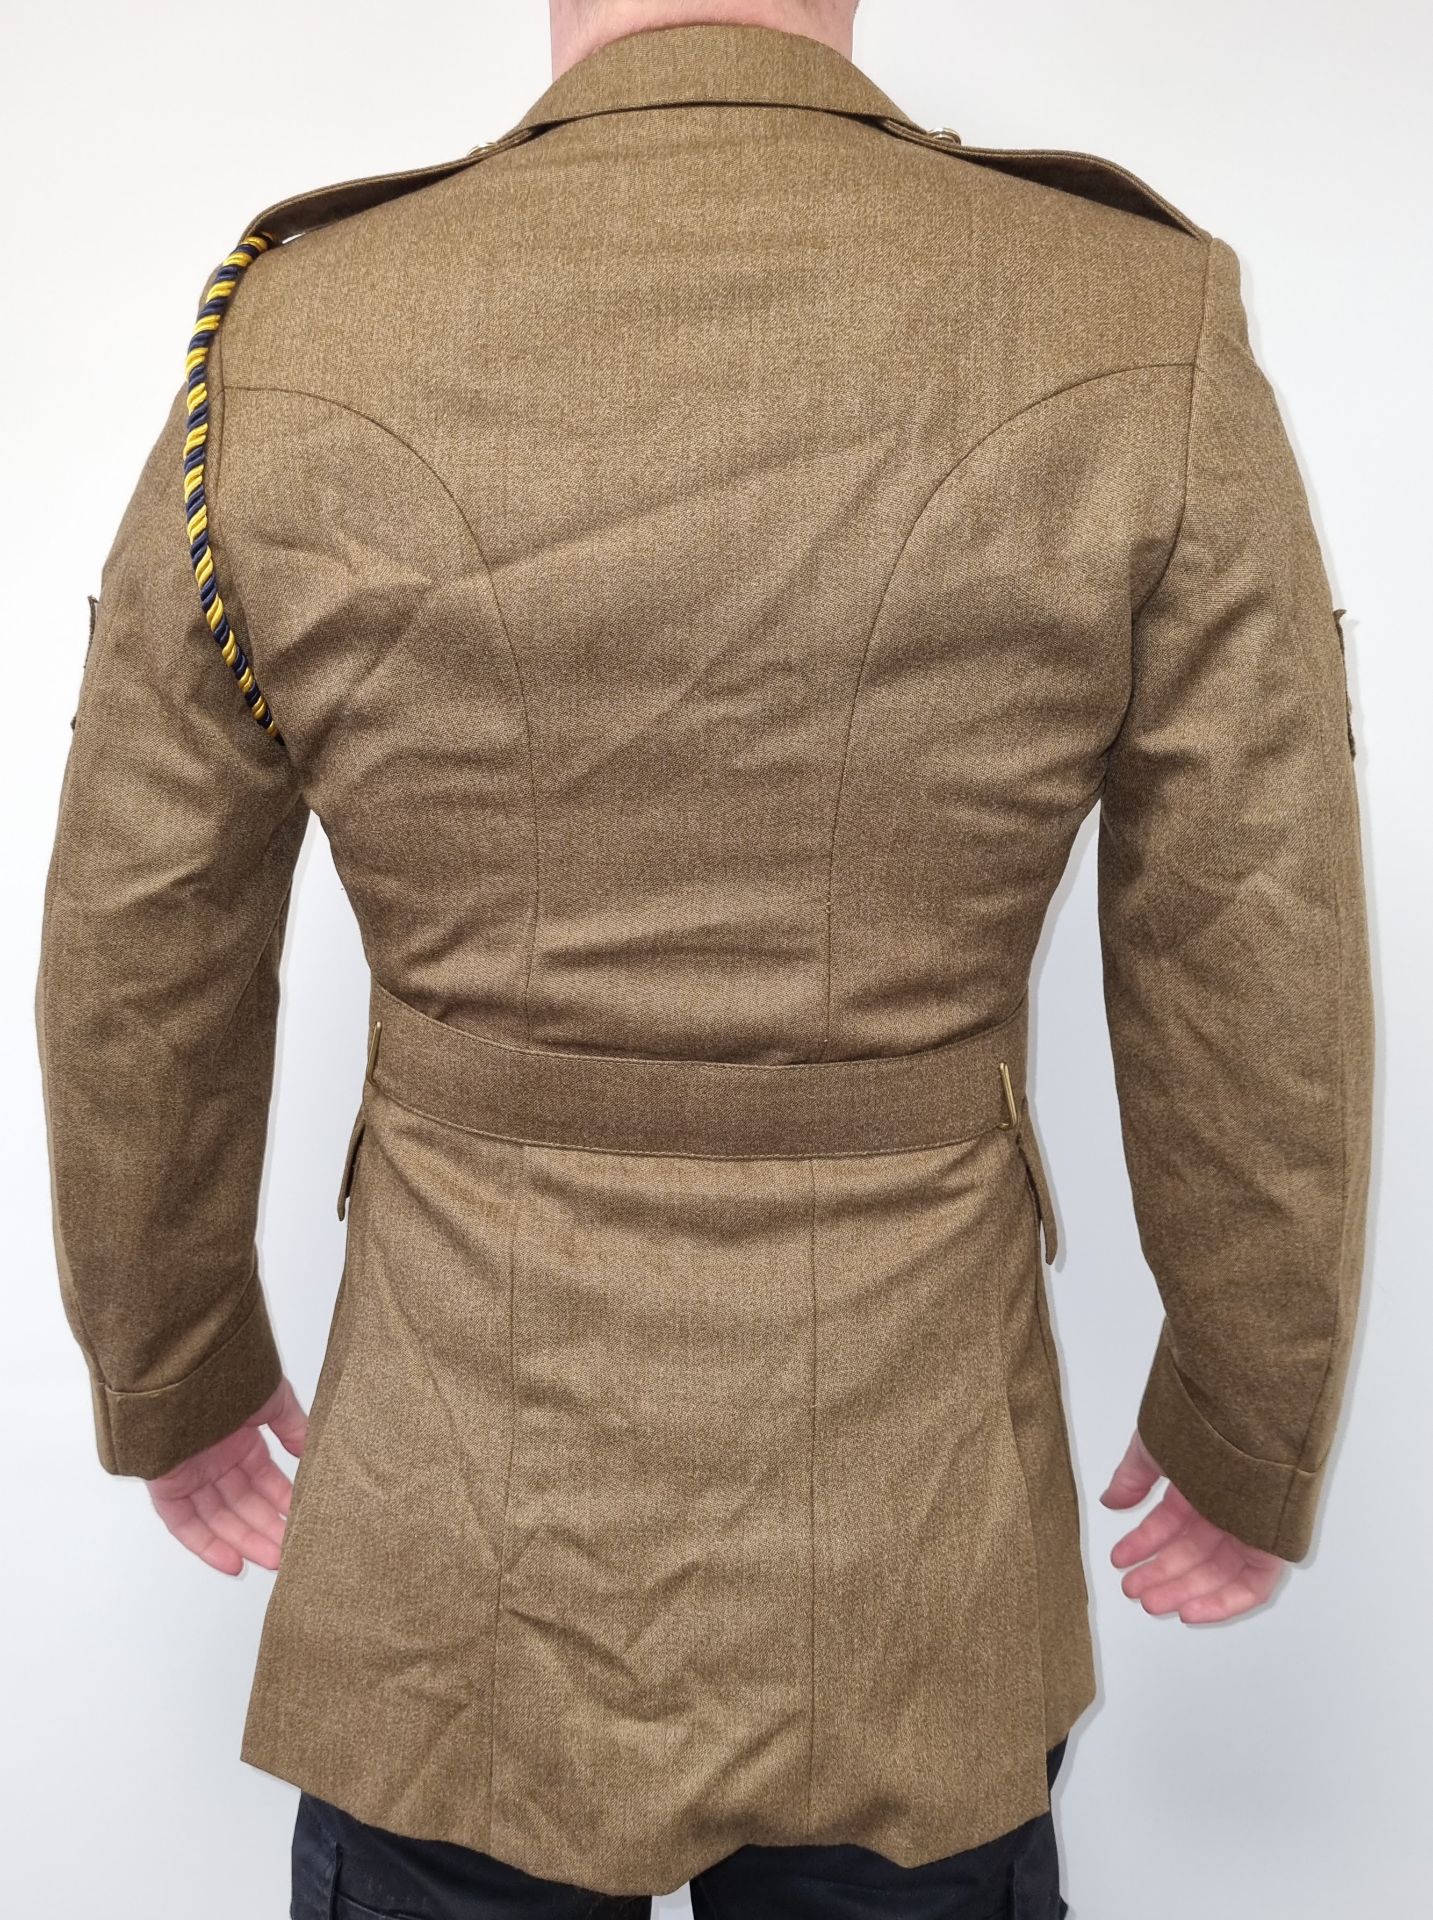 50x British Army No.2 dress jacket - mixed grades and sizes - Image 2 of 8